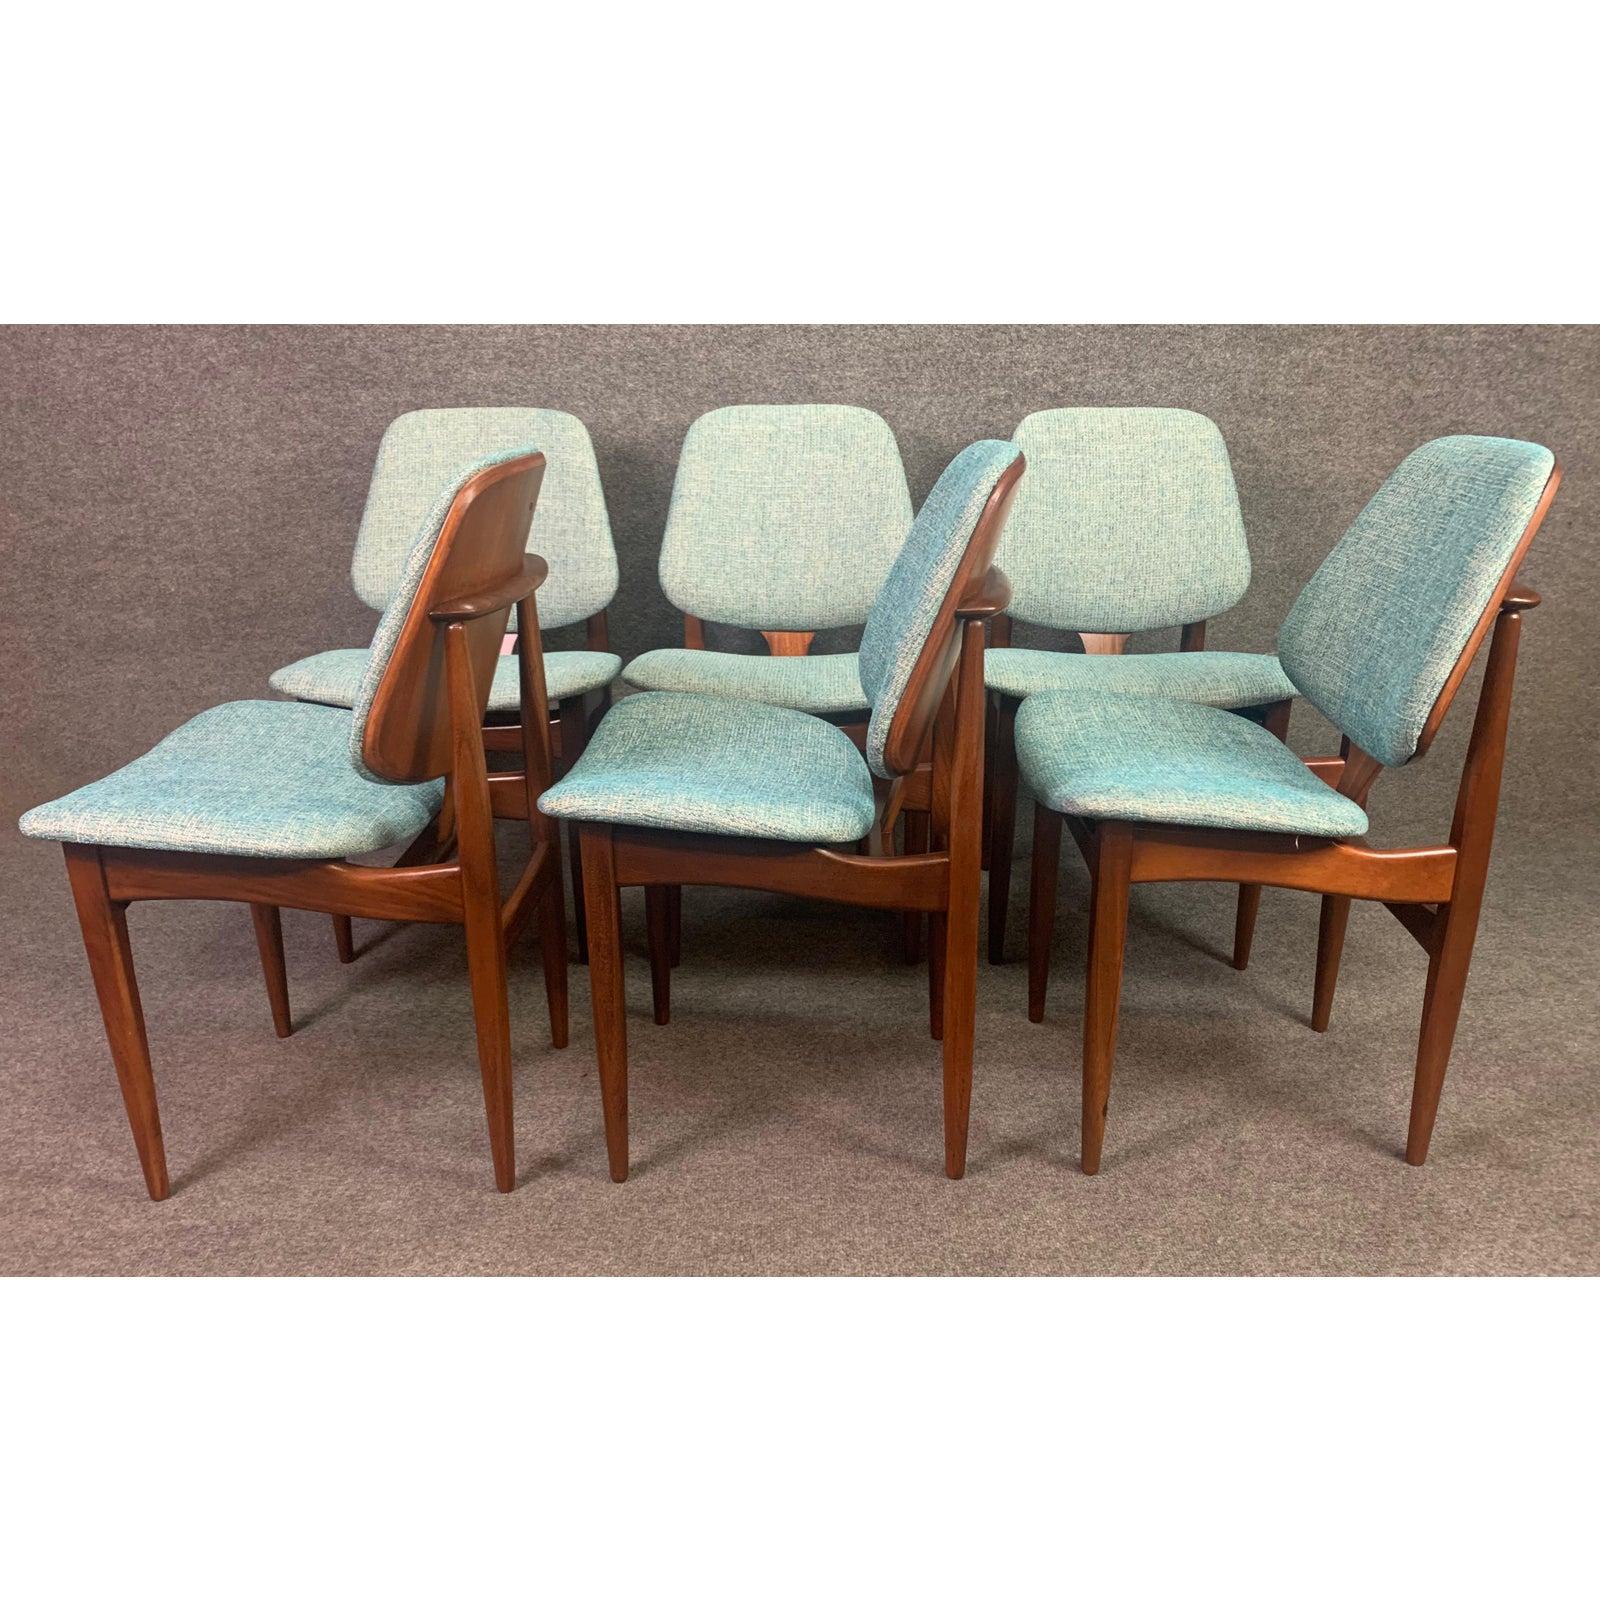 English Vintage British Mid-Century Modern Teak Chairs by Elliotts of Newbury, Set of 6